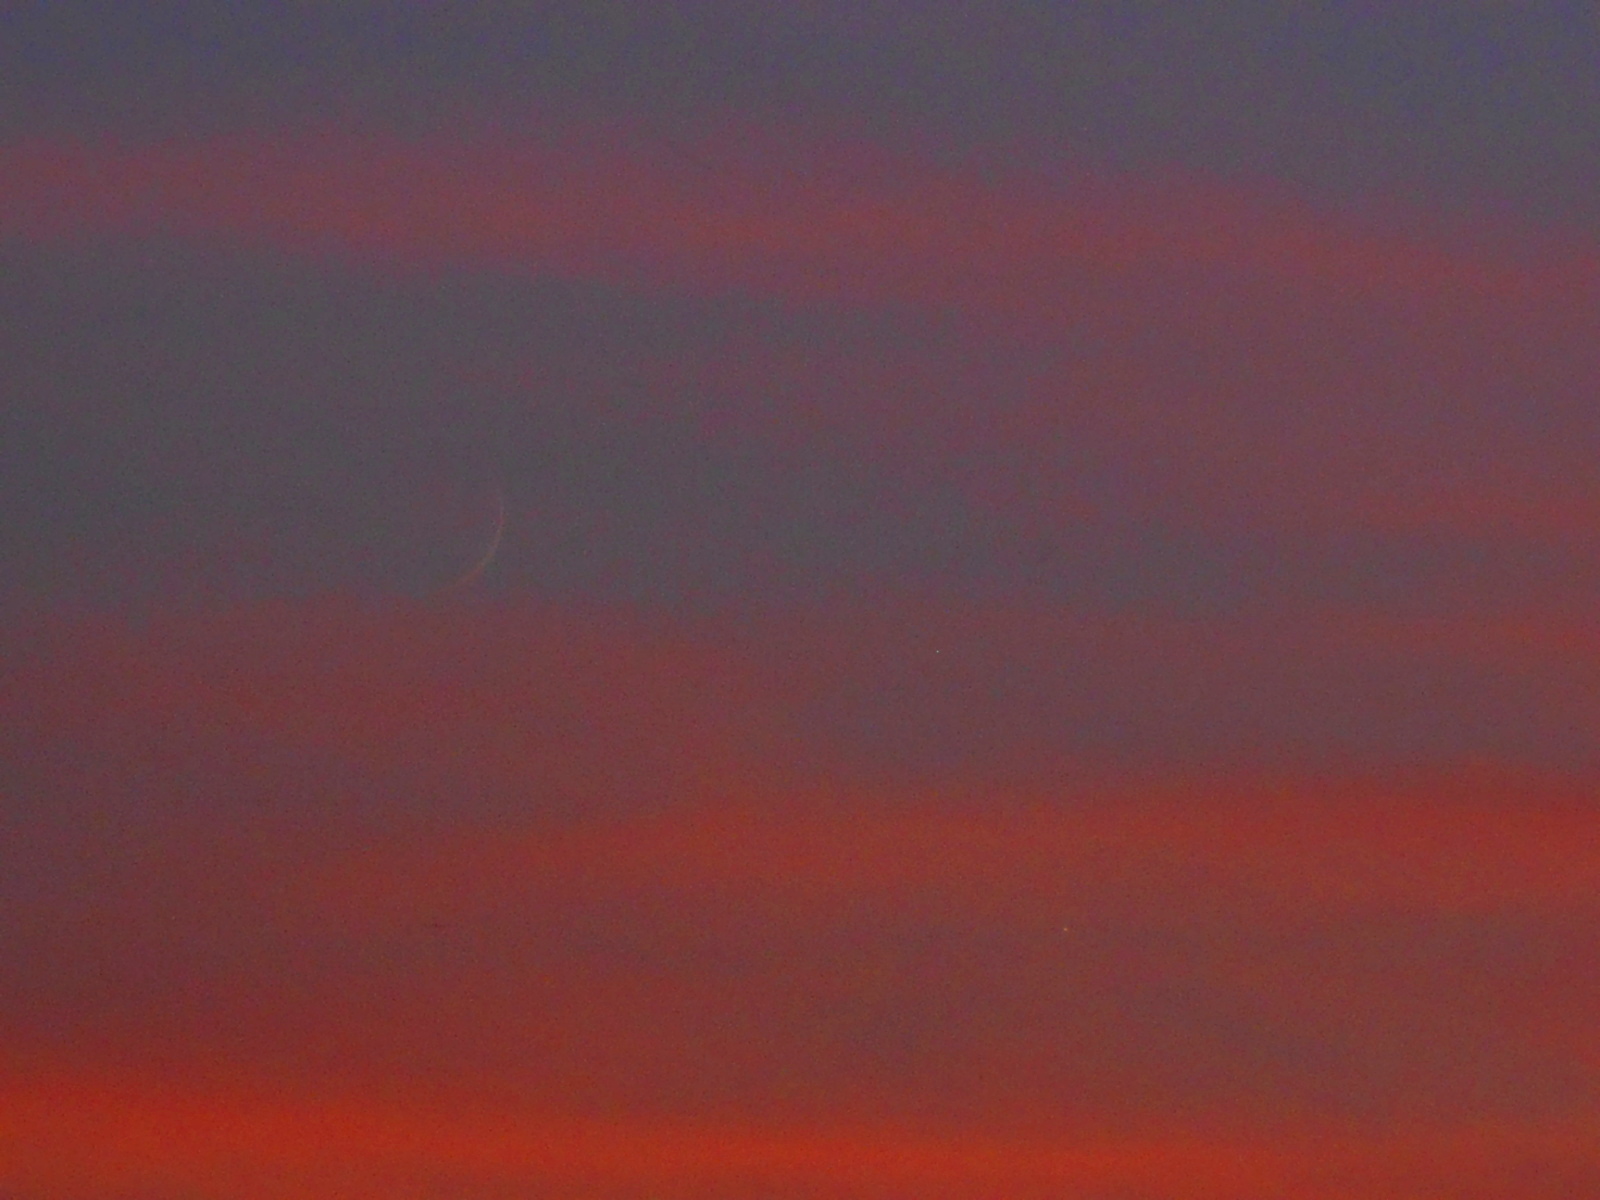 Two days New Moon + Venus 3.09.16